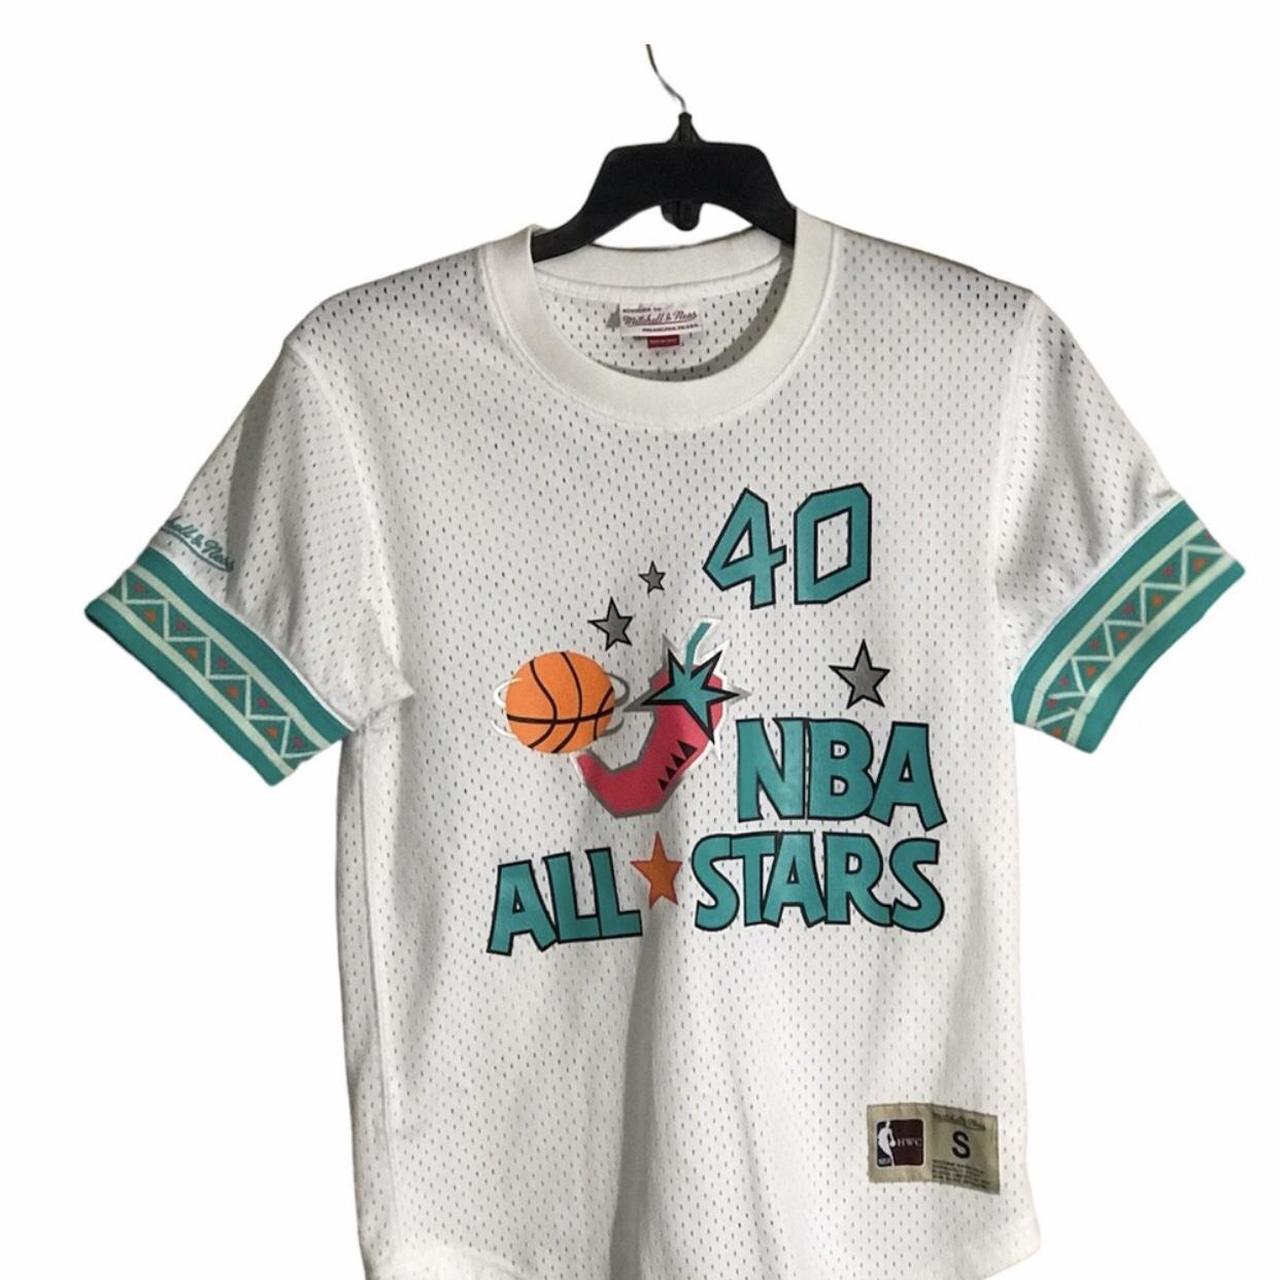 1996 nba all star t shirt